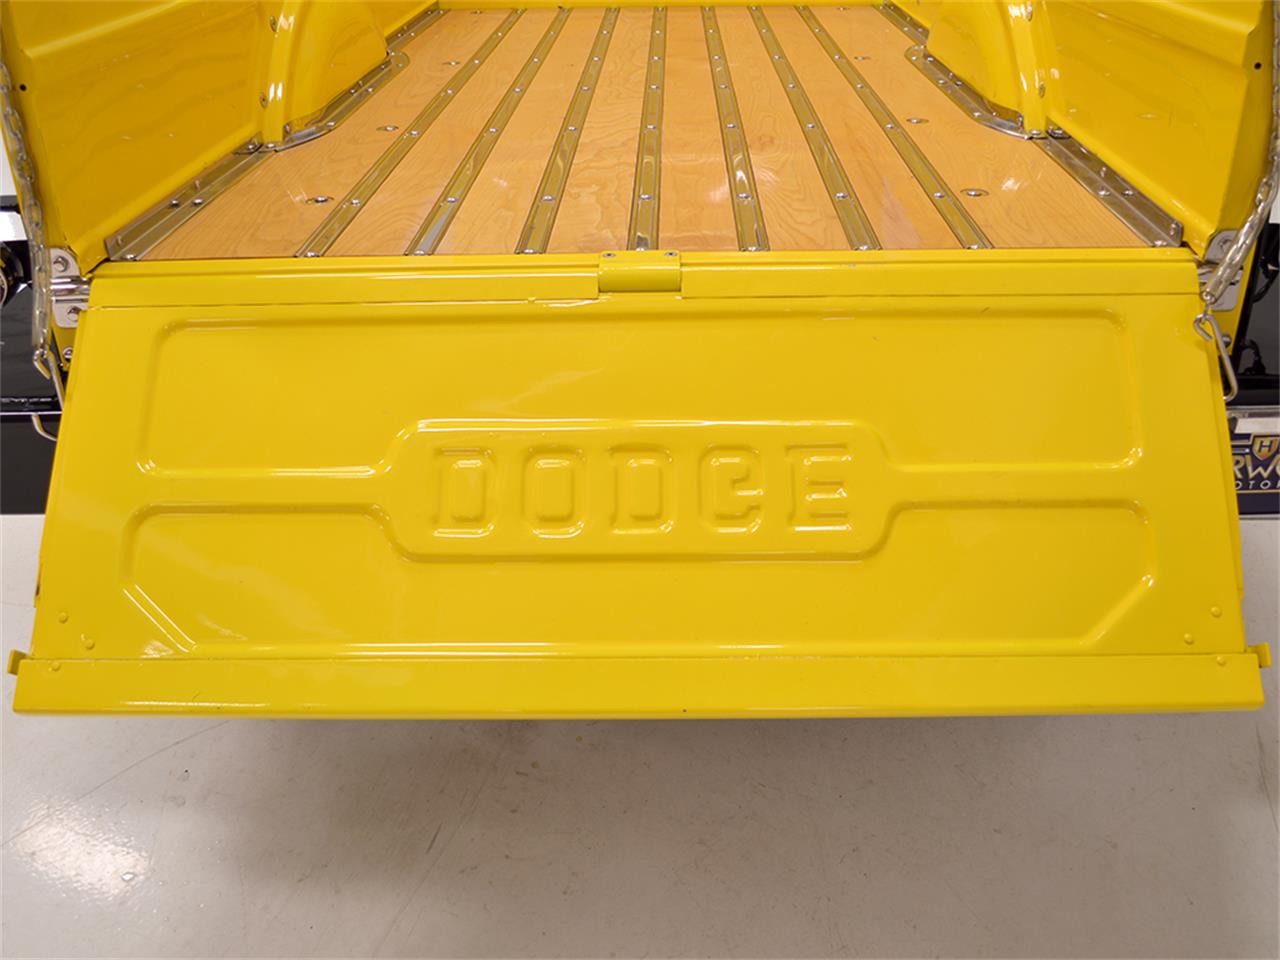 1967 Dodge Power Wagon For Sale Cc 969685